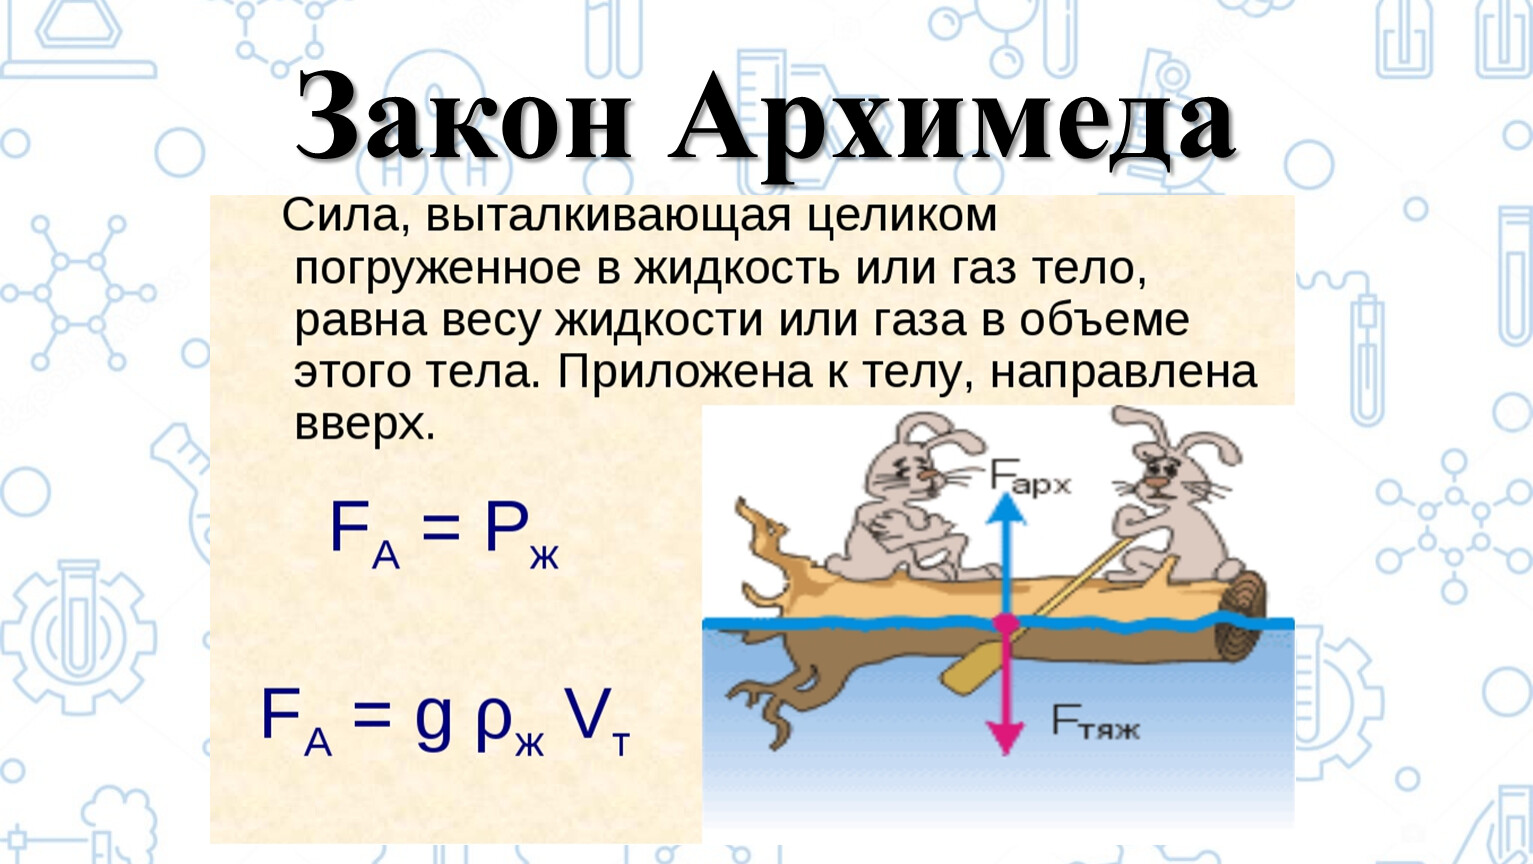 3 формулы архимеда. Формулы по физике 7 класс сила Архимеда. Сила Архимеда формула 7 класс. Сила Архимеда 7 класс физика. Закон Архимеда 7 класс физика формула.